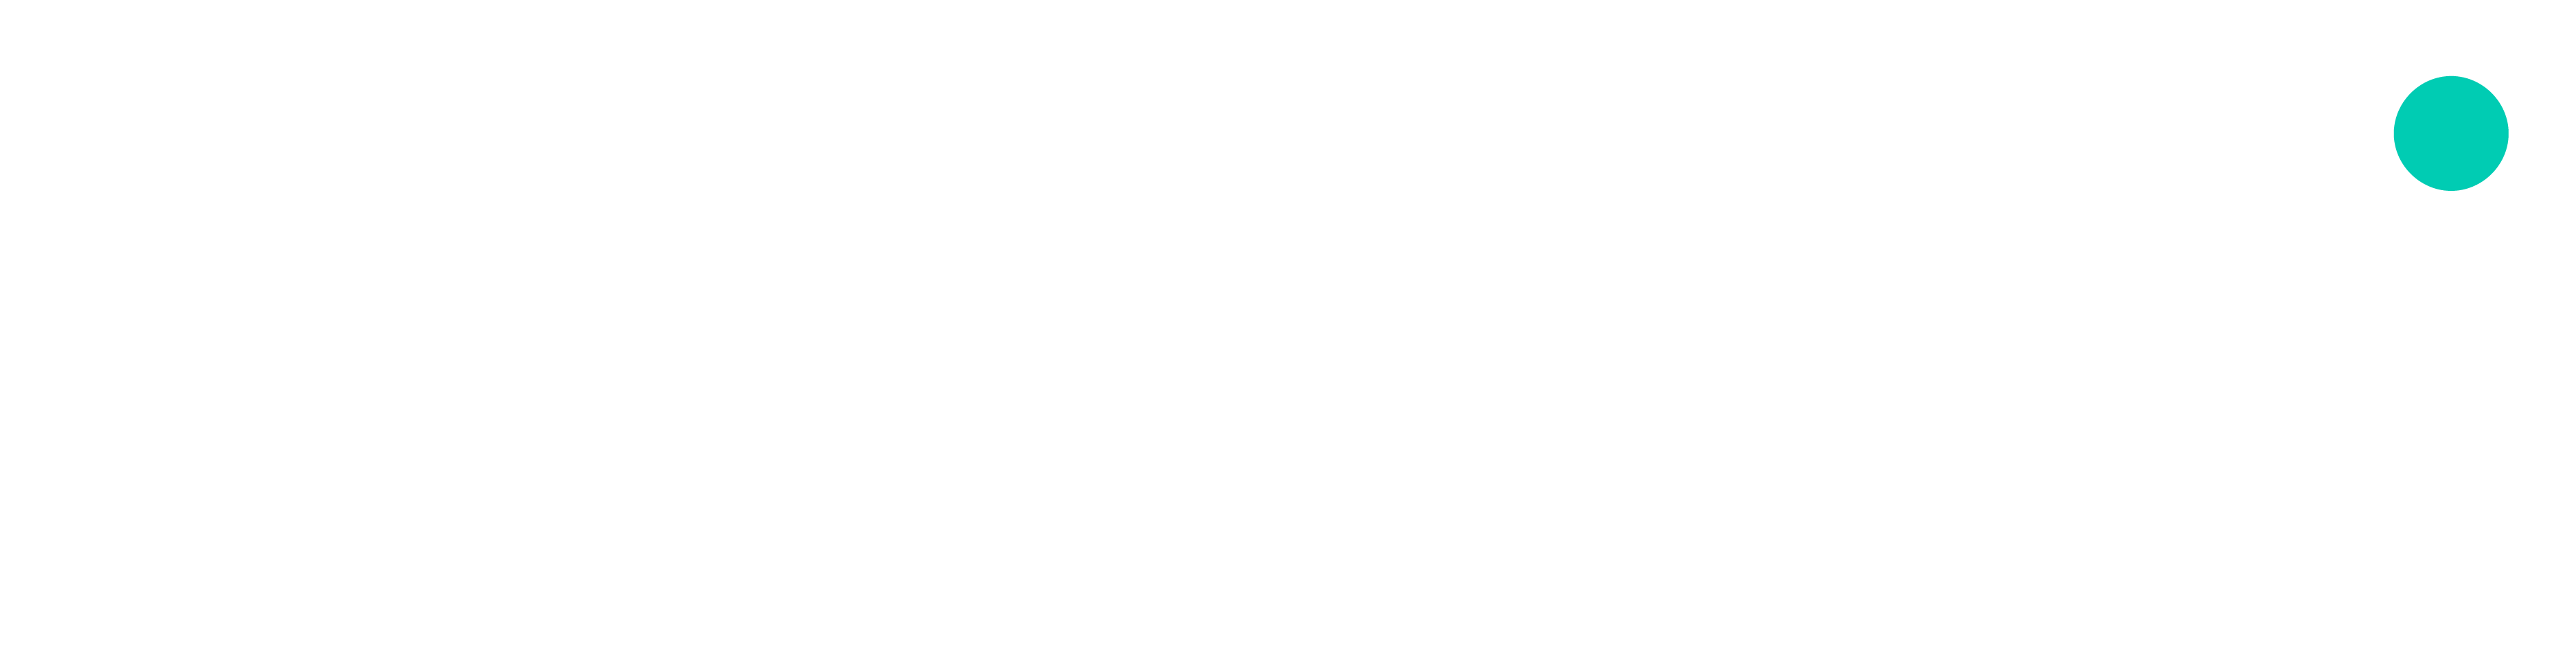 Sensio logo